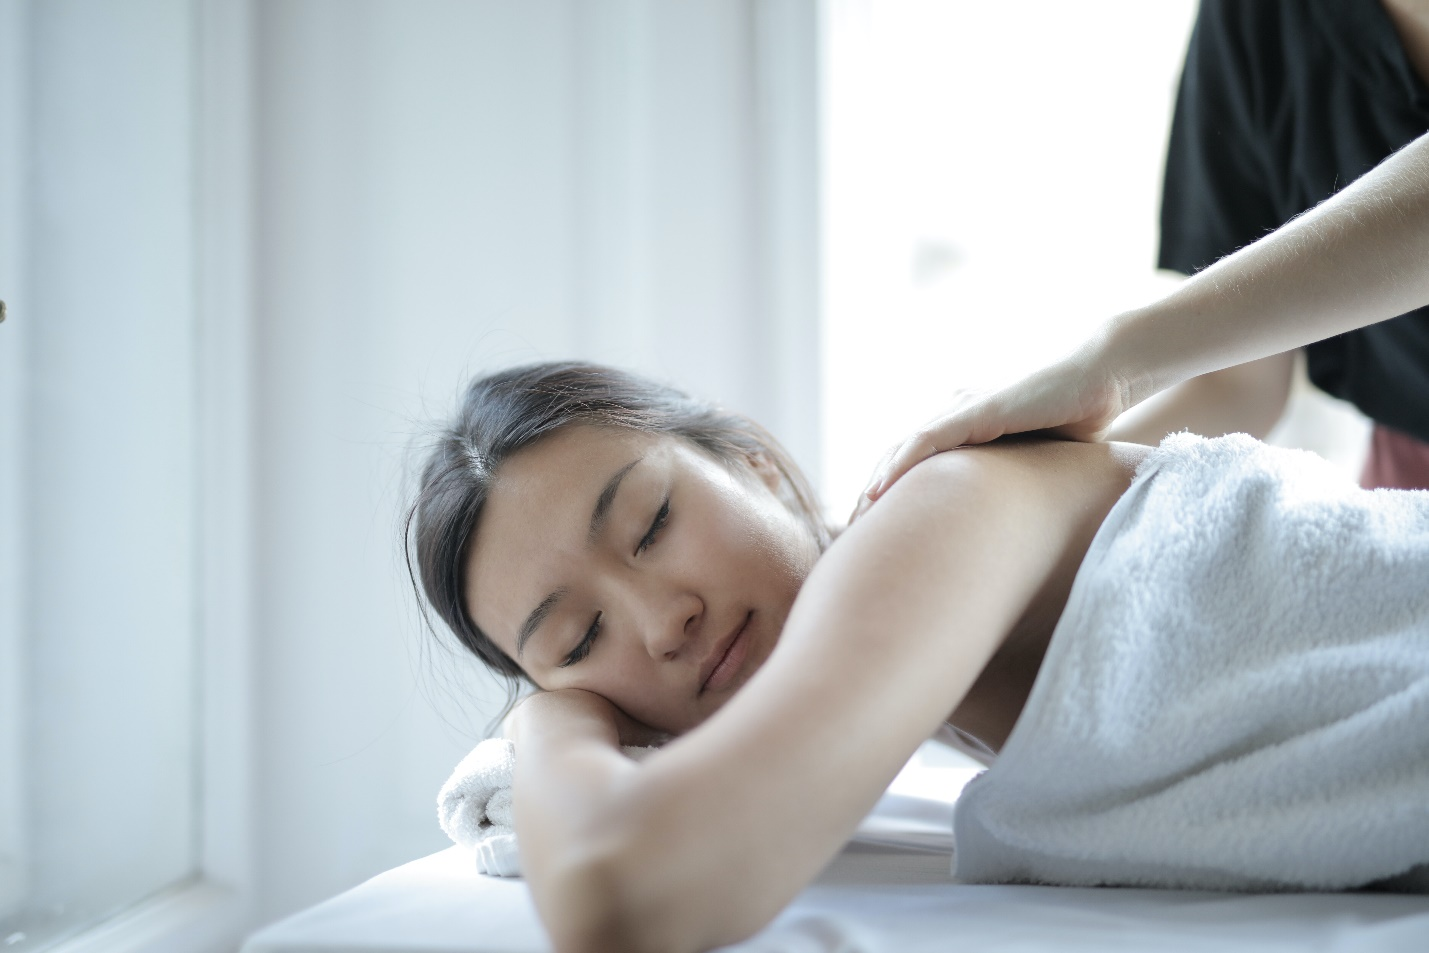 A woman getting a full-body massage